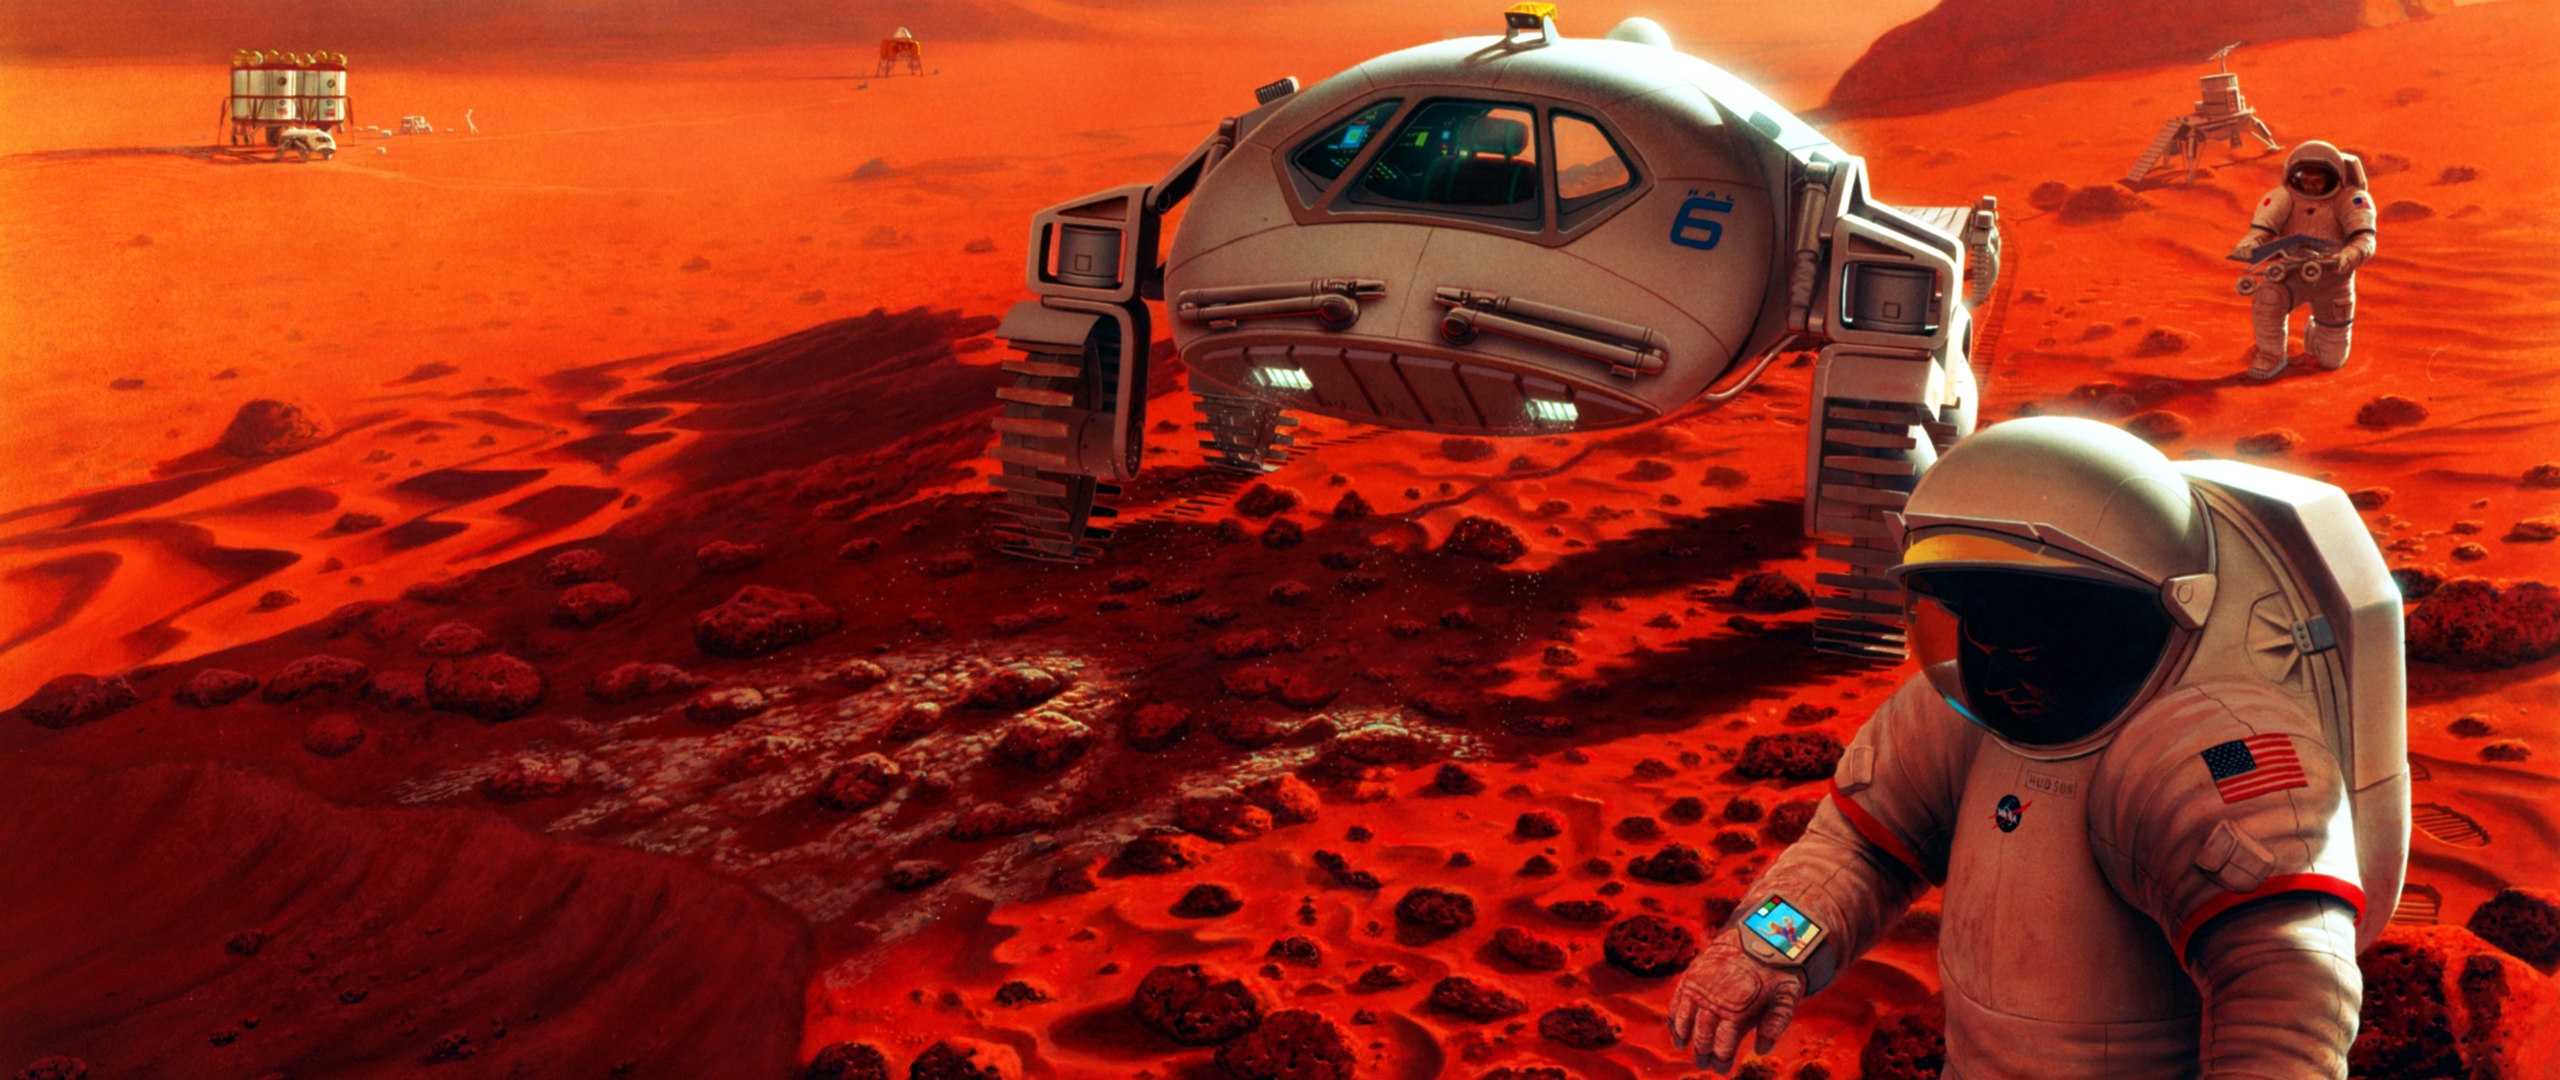 scifi-astronaut-space-mars-rover-4k-ql.jpg